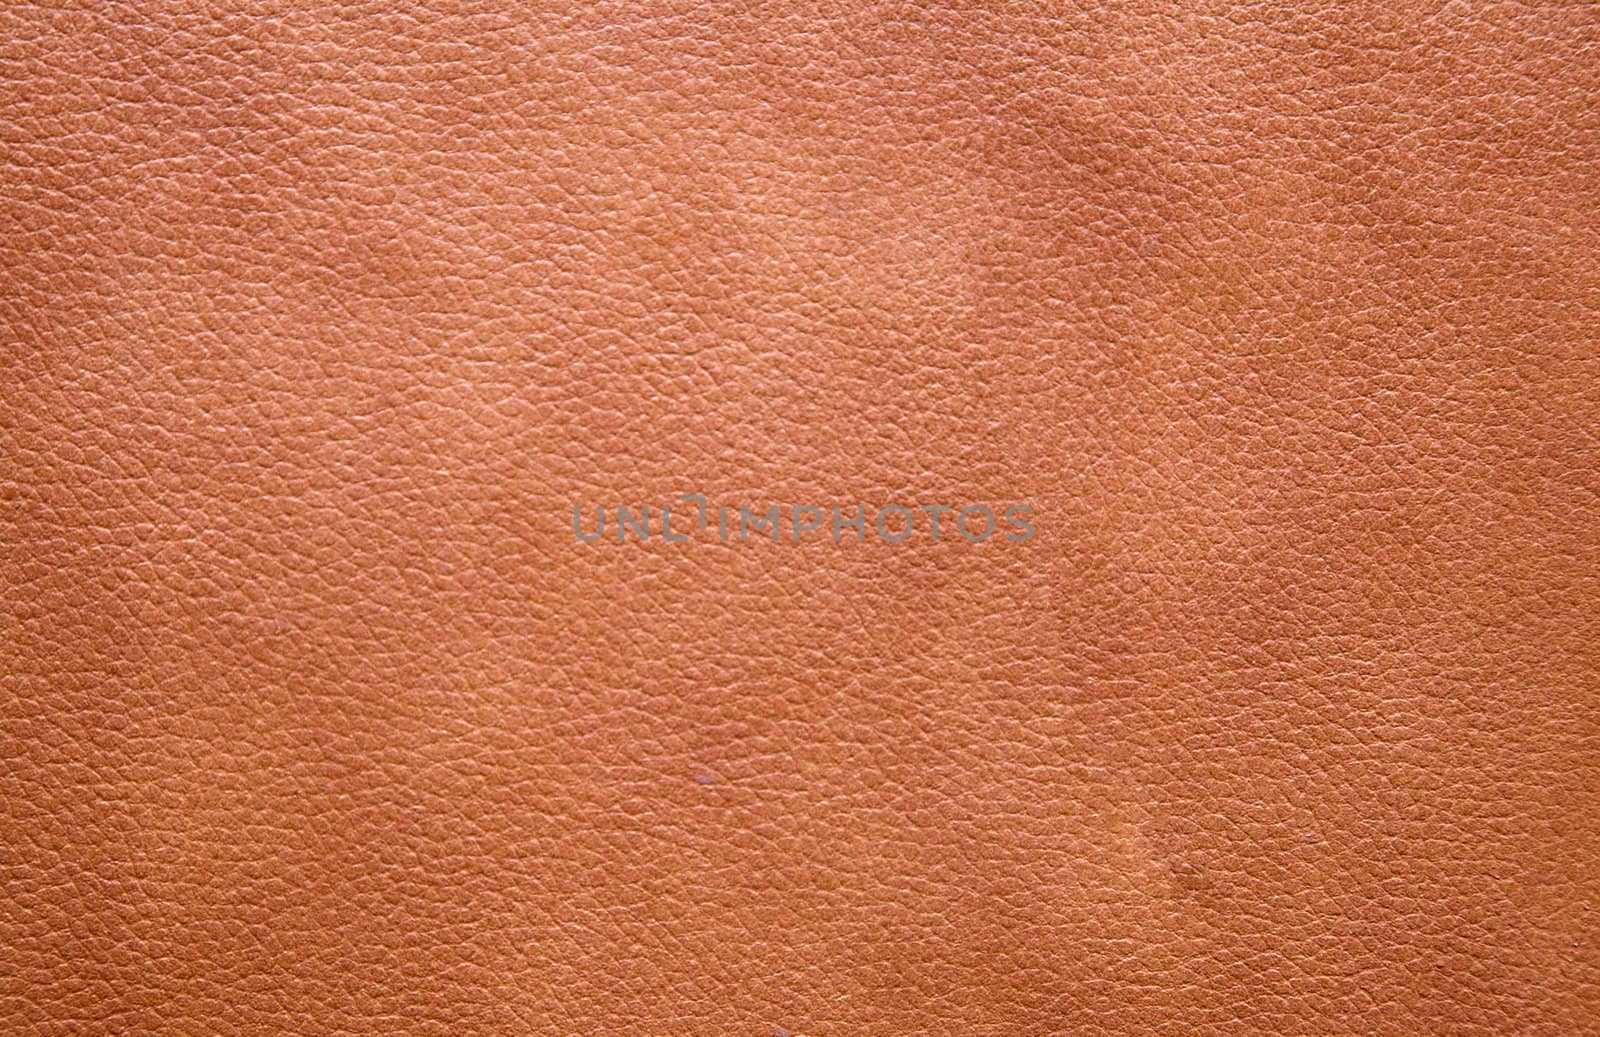 Leather Texture by mereutaandrei